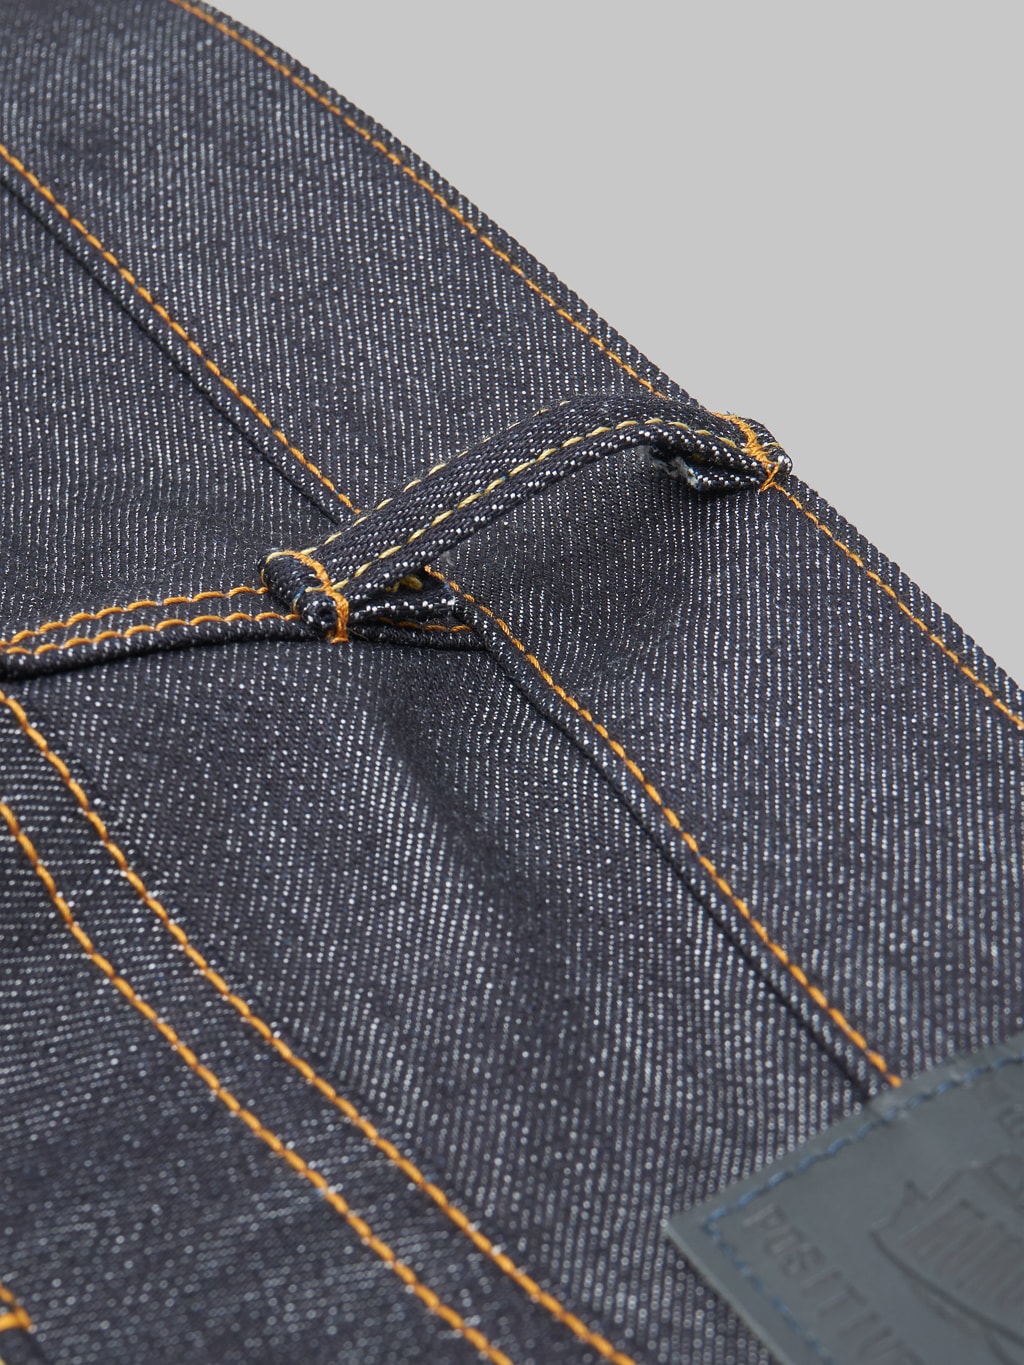 Momotaro 0306SILK 14.5oz Silk Denim Tight Tapered Jeans